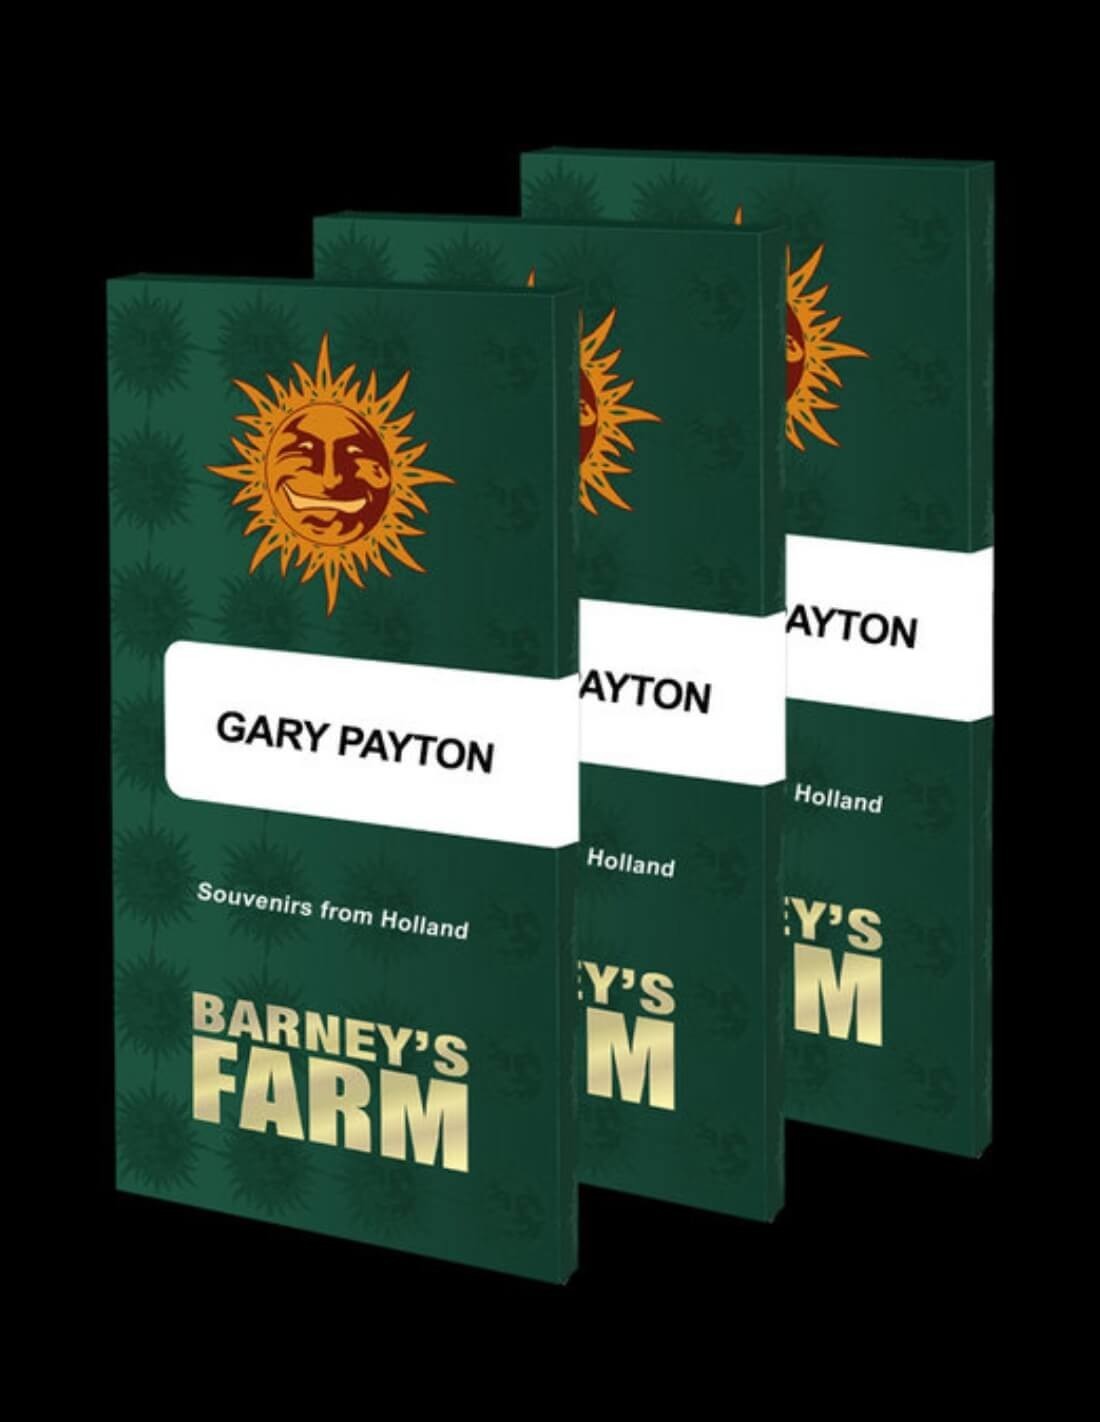 Gary Payton by Barney's Farm Seeds